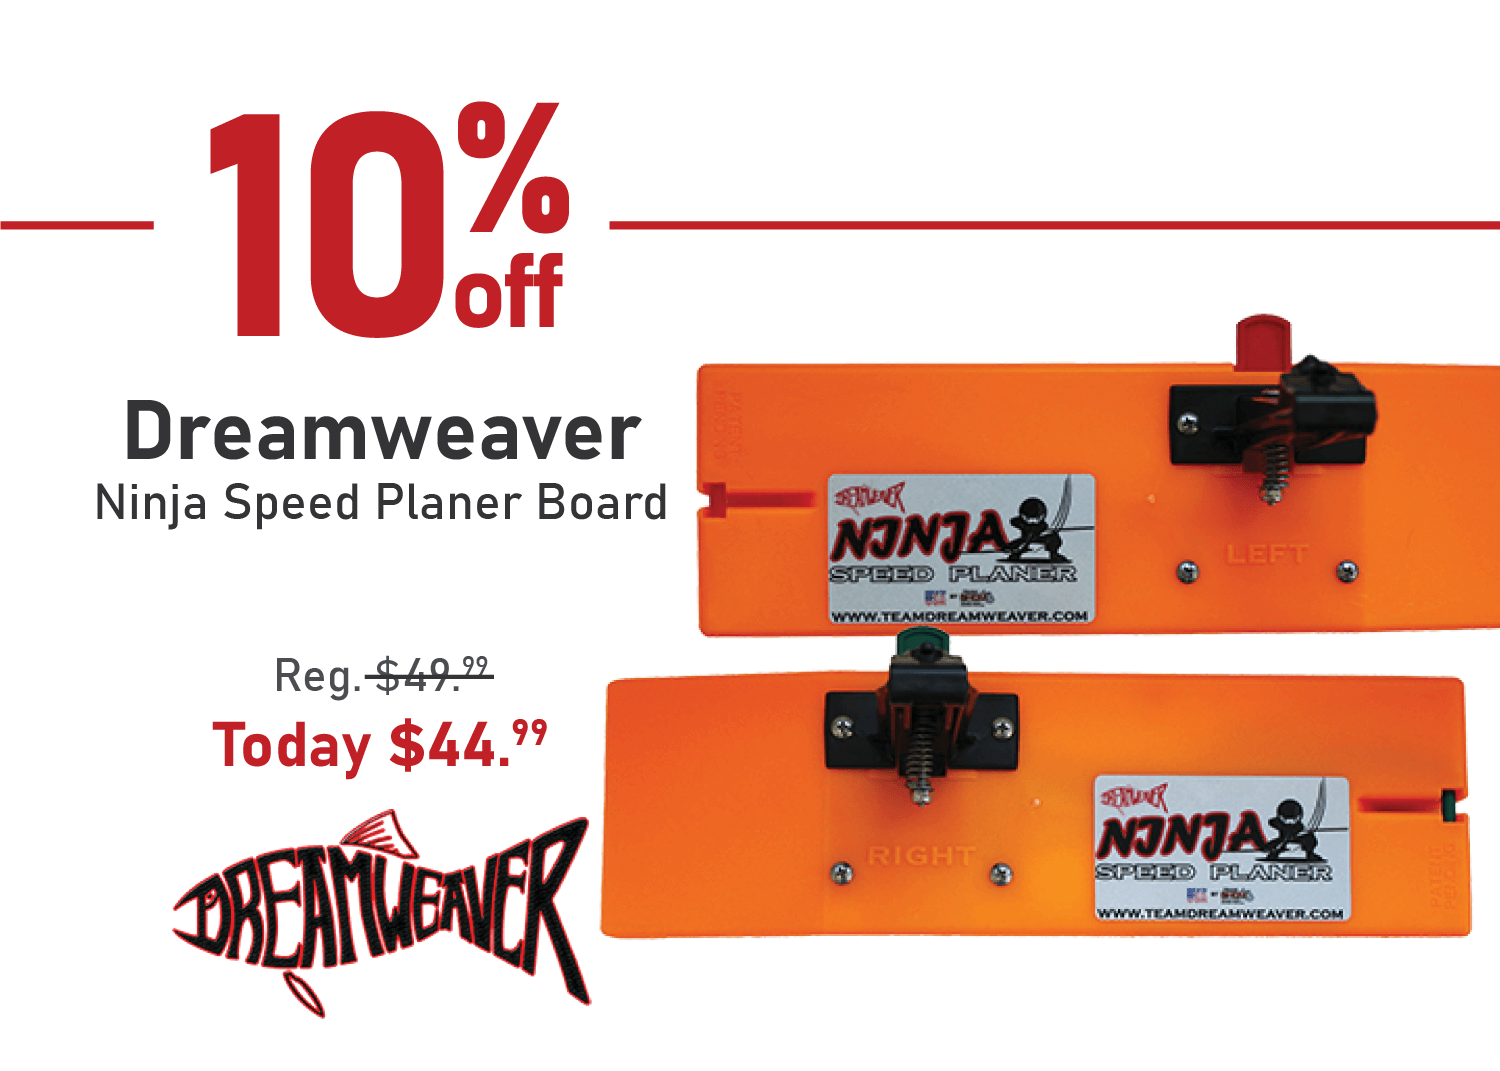 Save 10% on the Dreamweaver Ninja Speed Planer Board